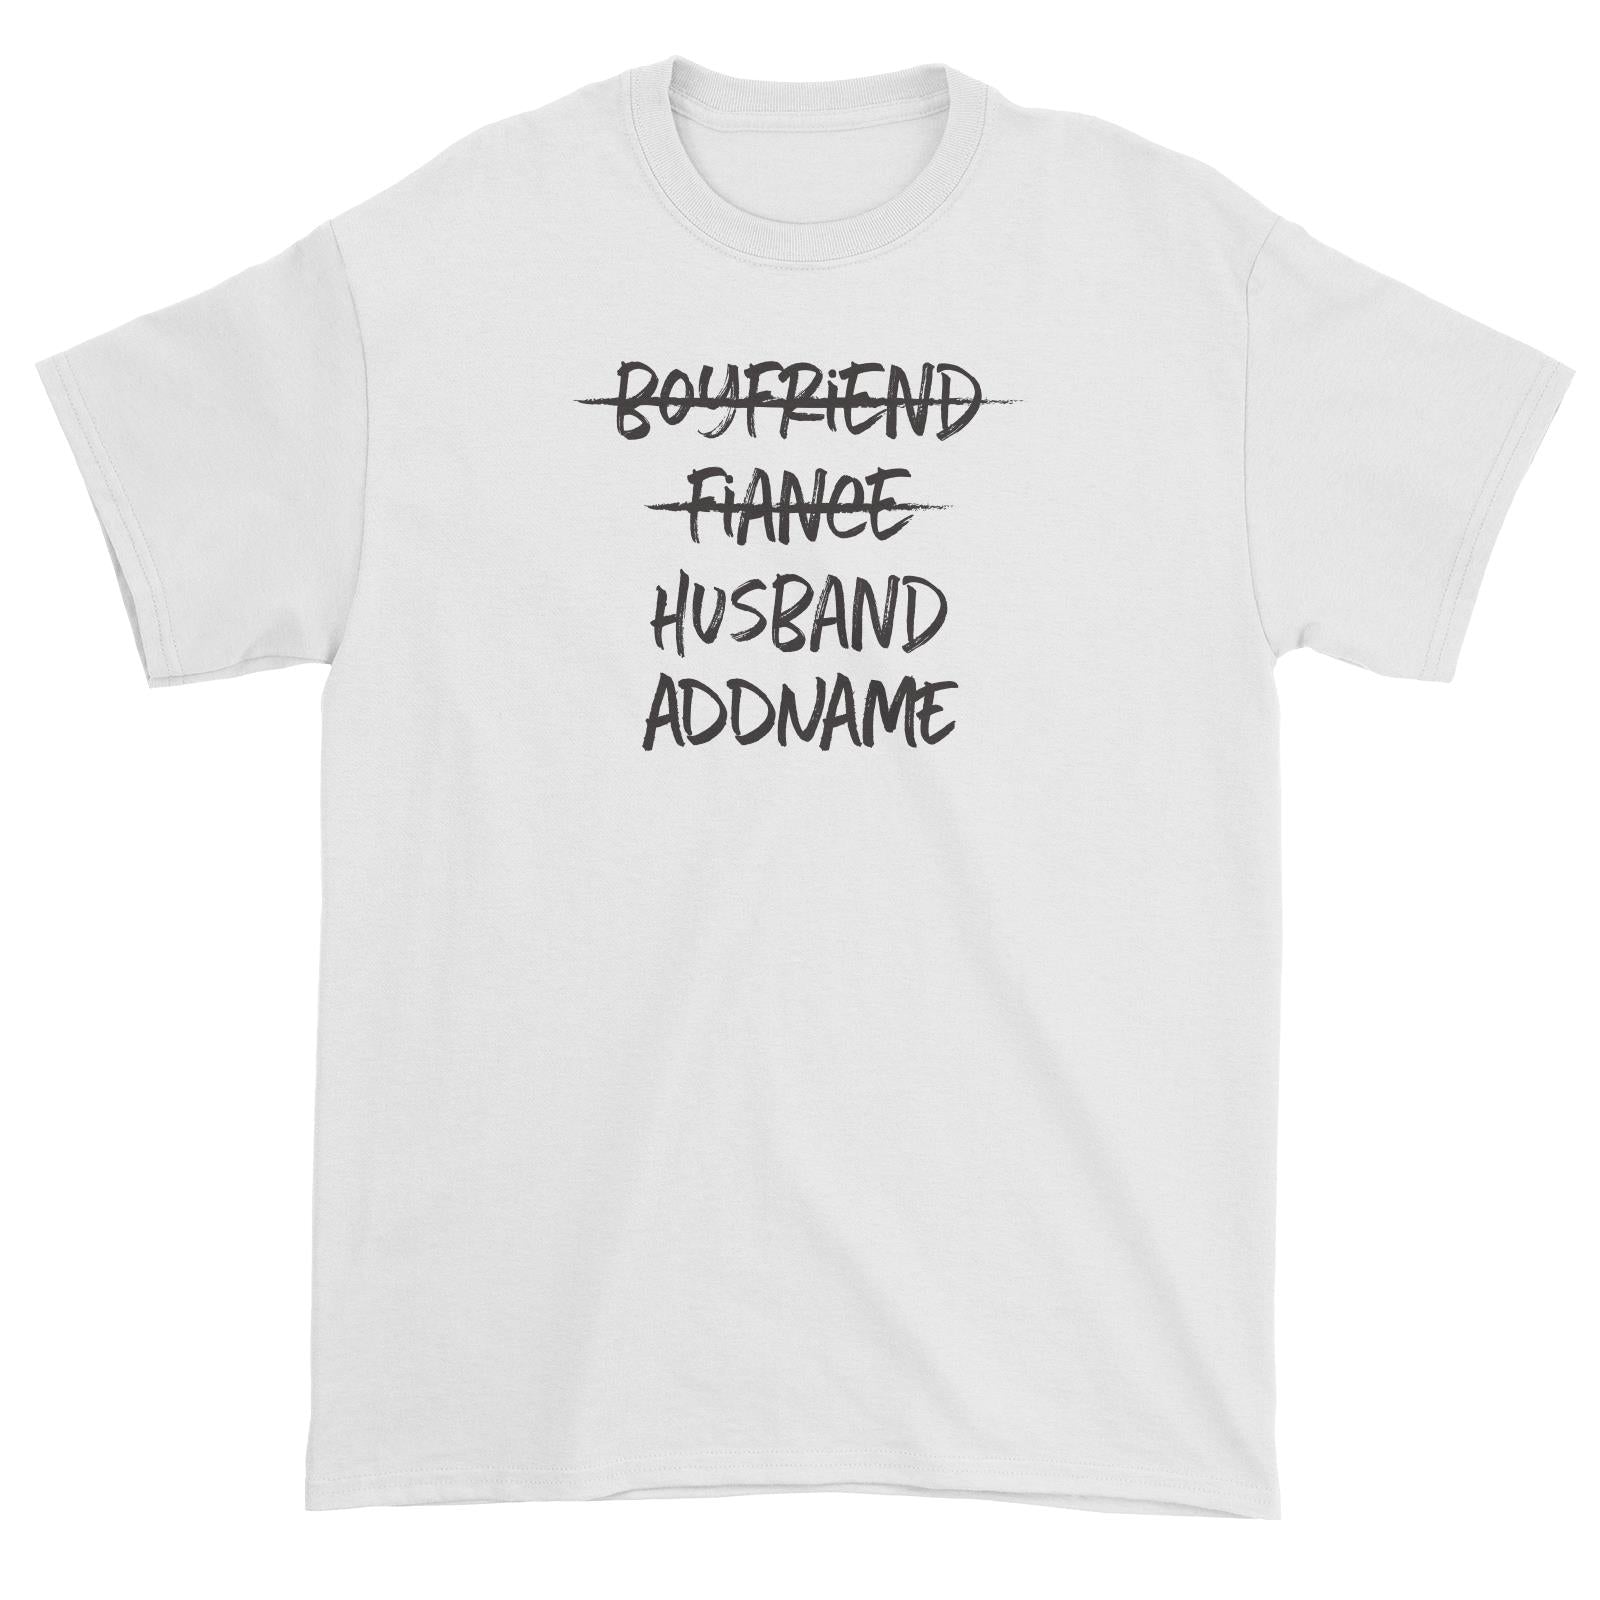 Husband and Wife Boyfriend Fiance Husband Addname Unisex T-Shirt